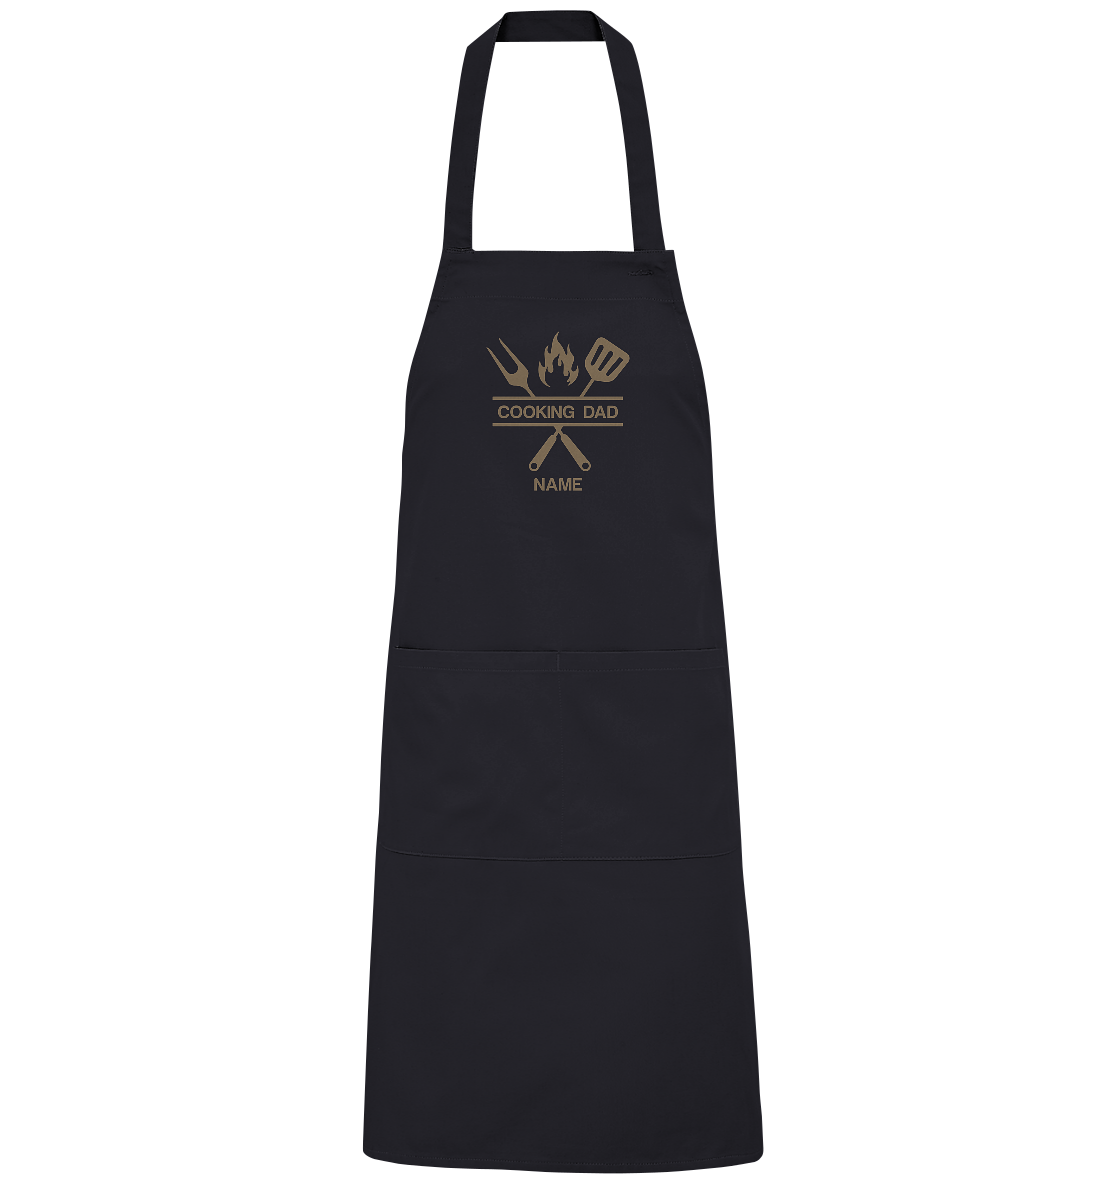 Avental Cooking DAD, nome personalizável - avental de churrasco orgânico